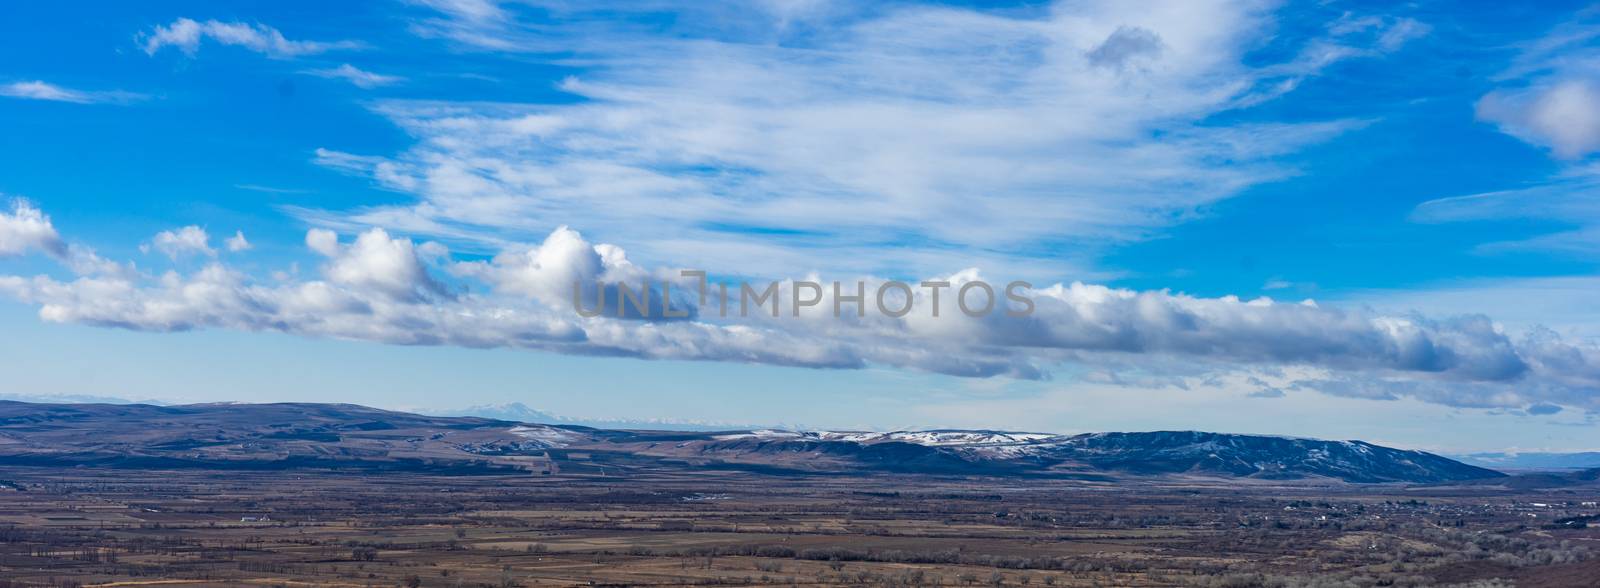 Kakheti landscape with Caucasus mountain on horizont by Elet